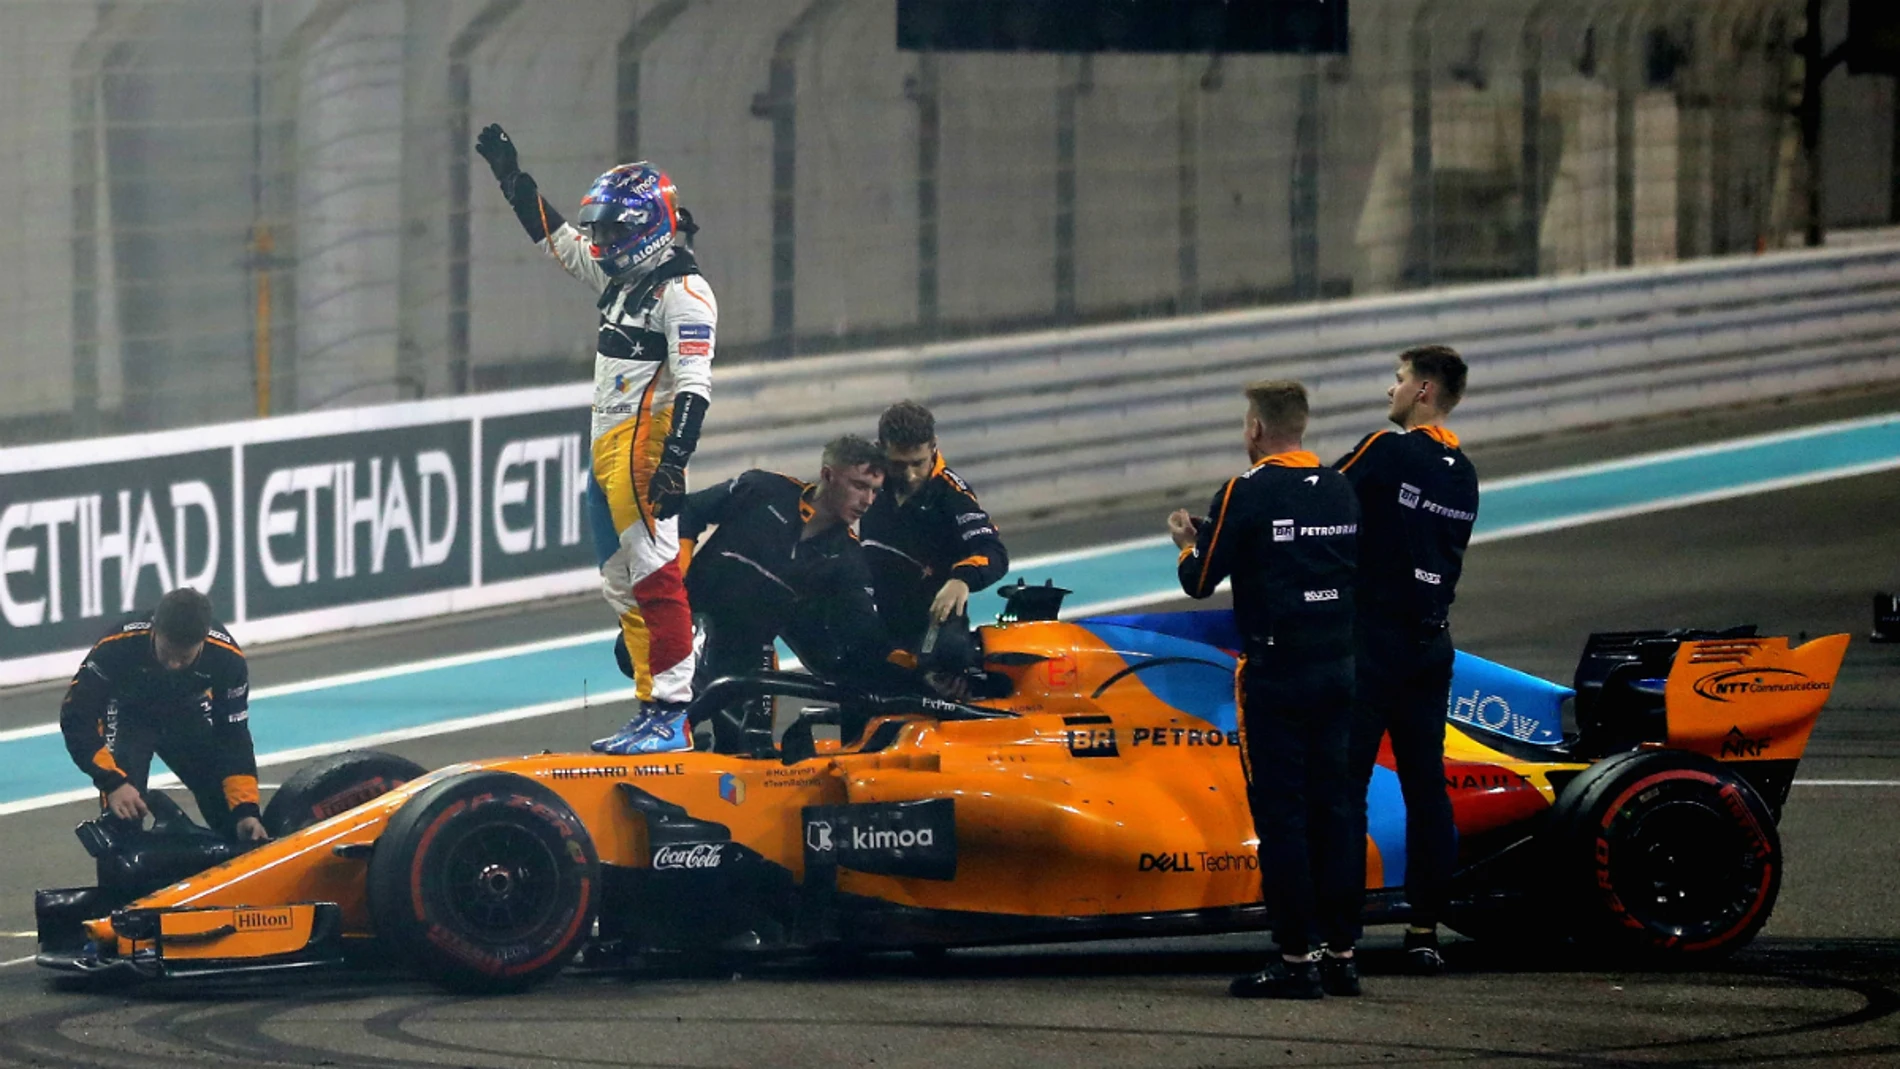 Fernando Alonso, sobre su McLaren